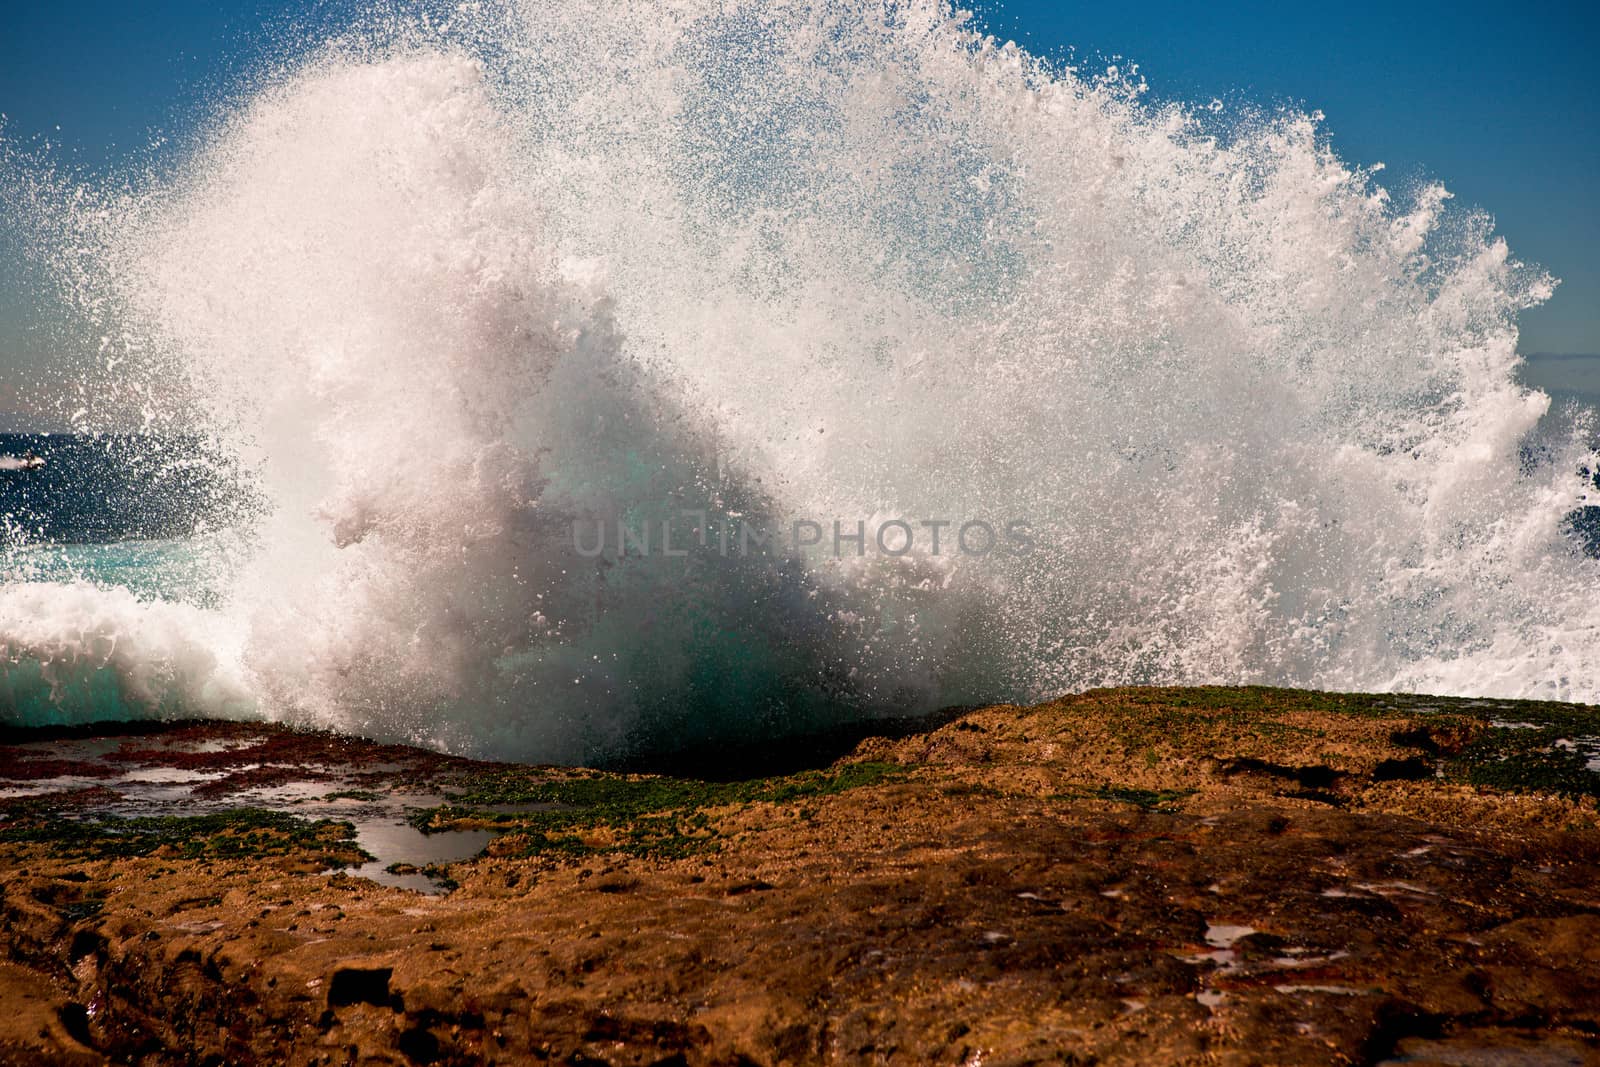 Big wave breaking on rocks by jrstock